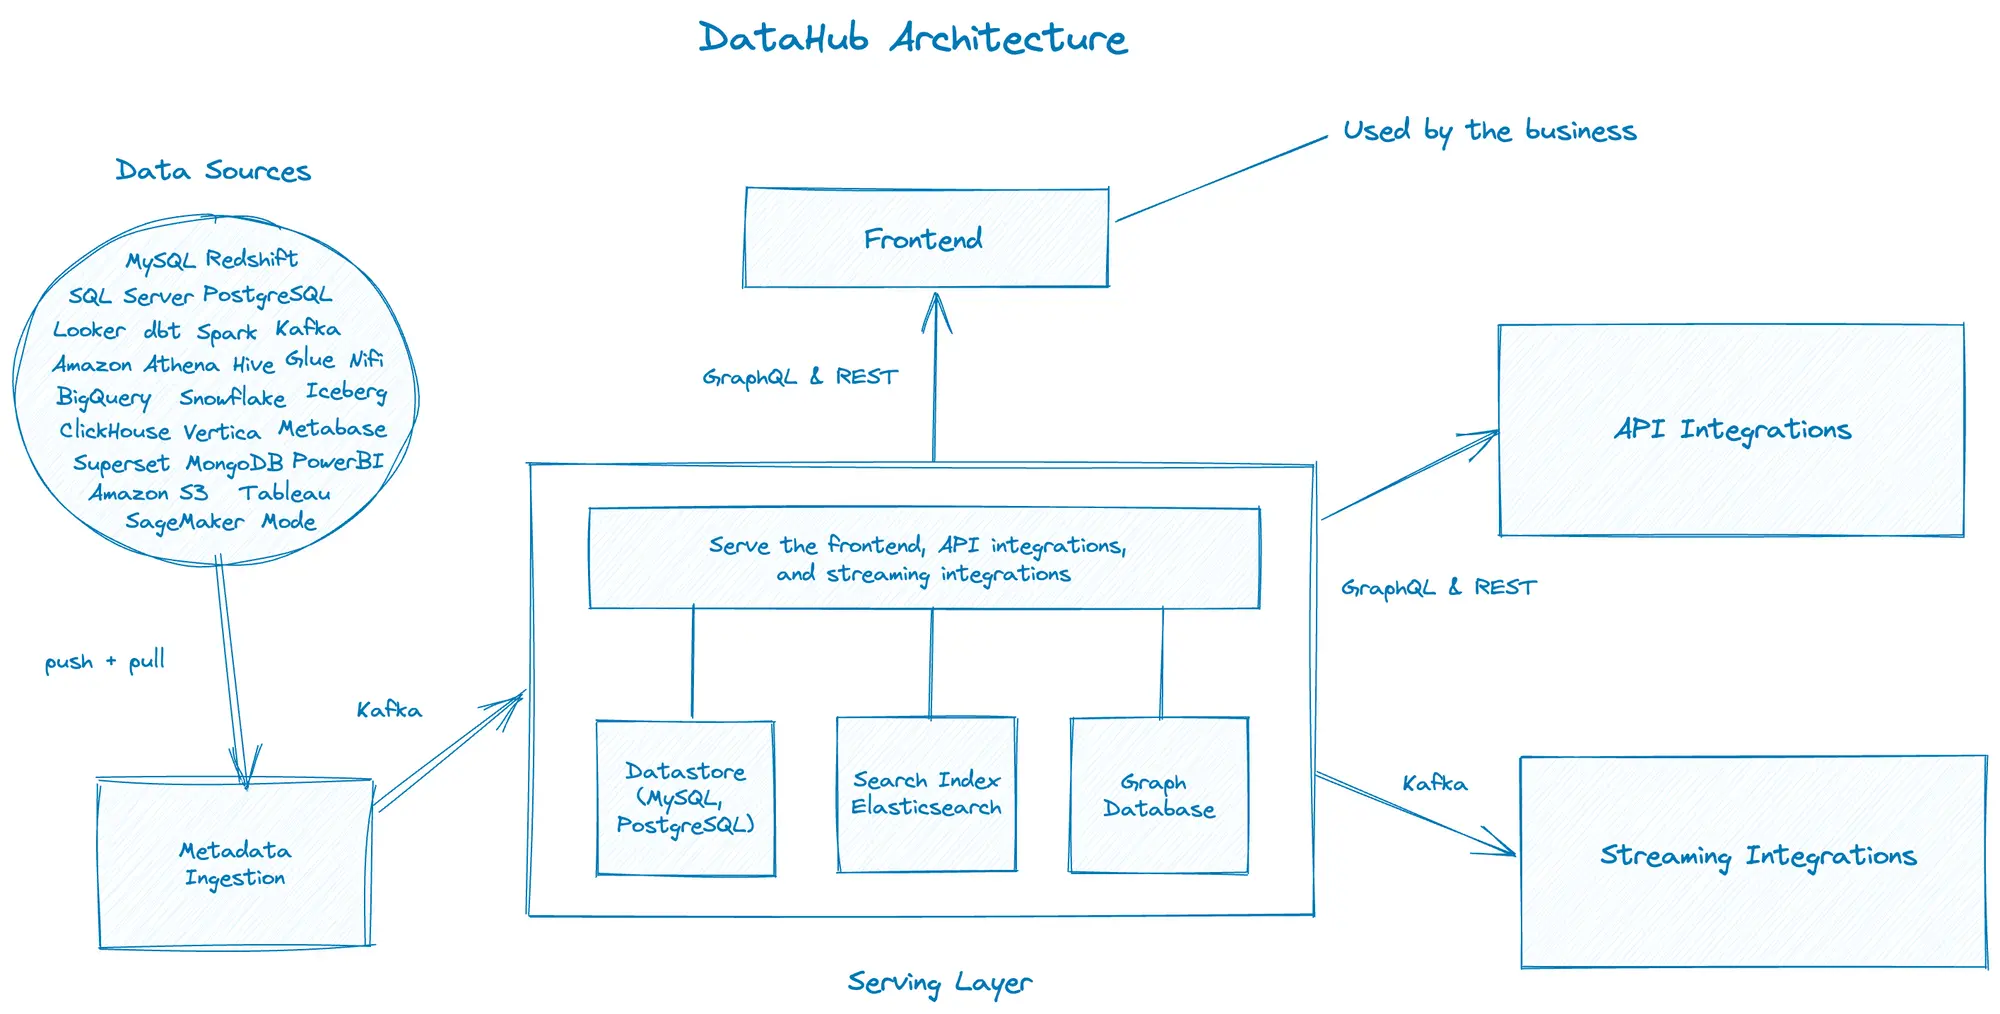 High level understanding of DataHub architecture